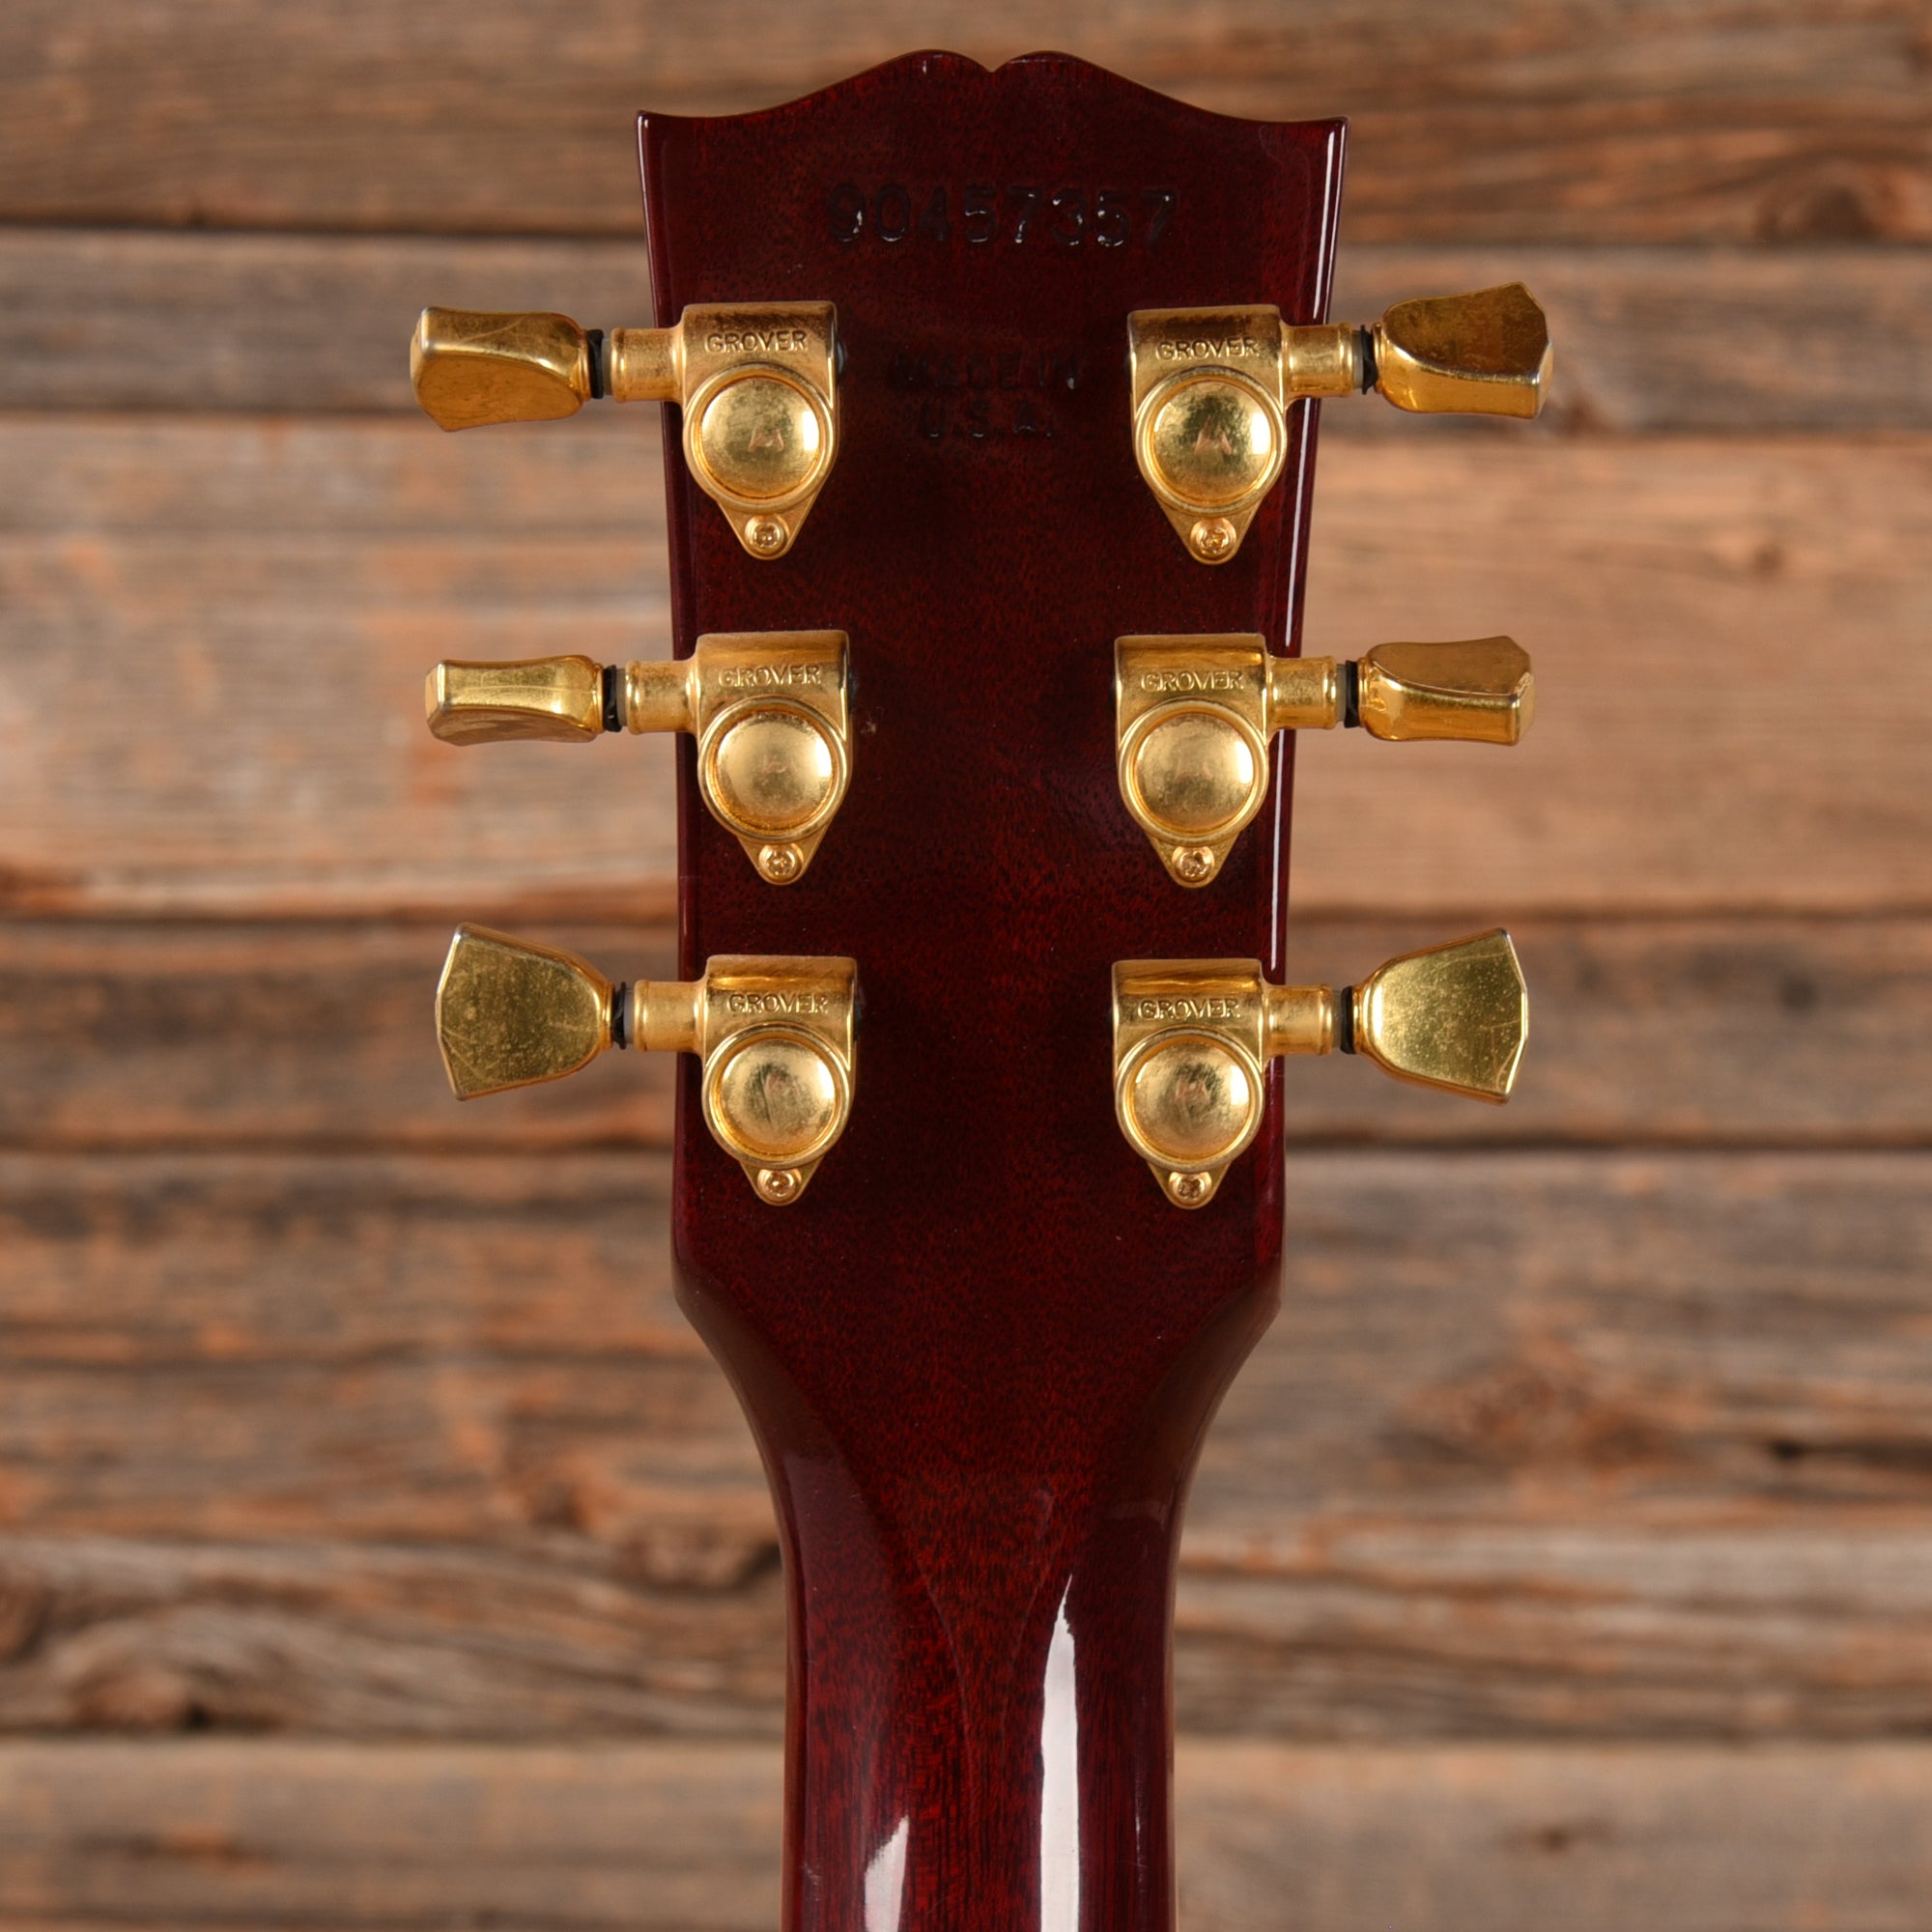 Gibson Jimmy Page Signature Les Paul Standard Sunburst 1997